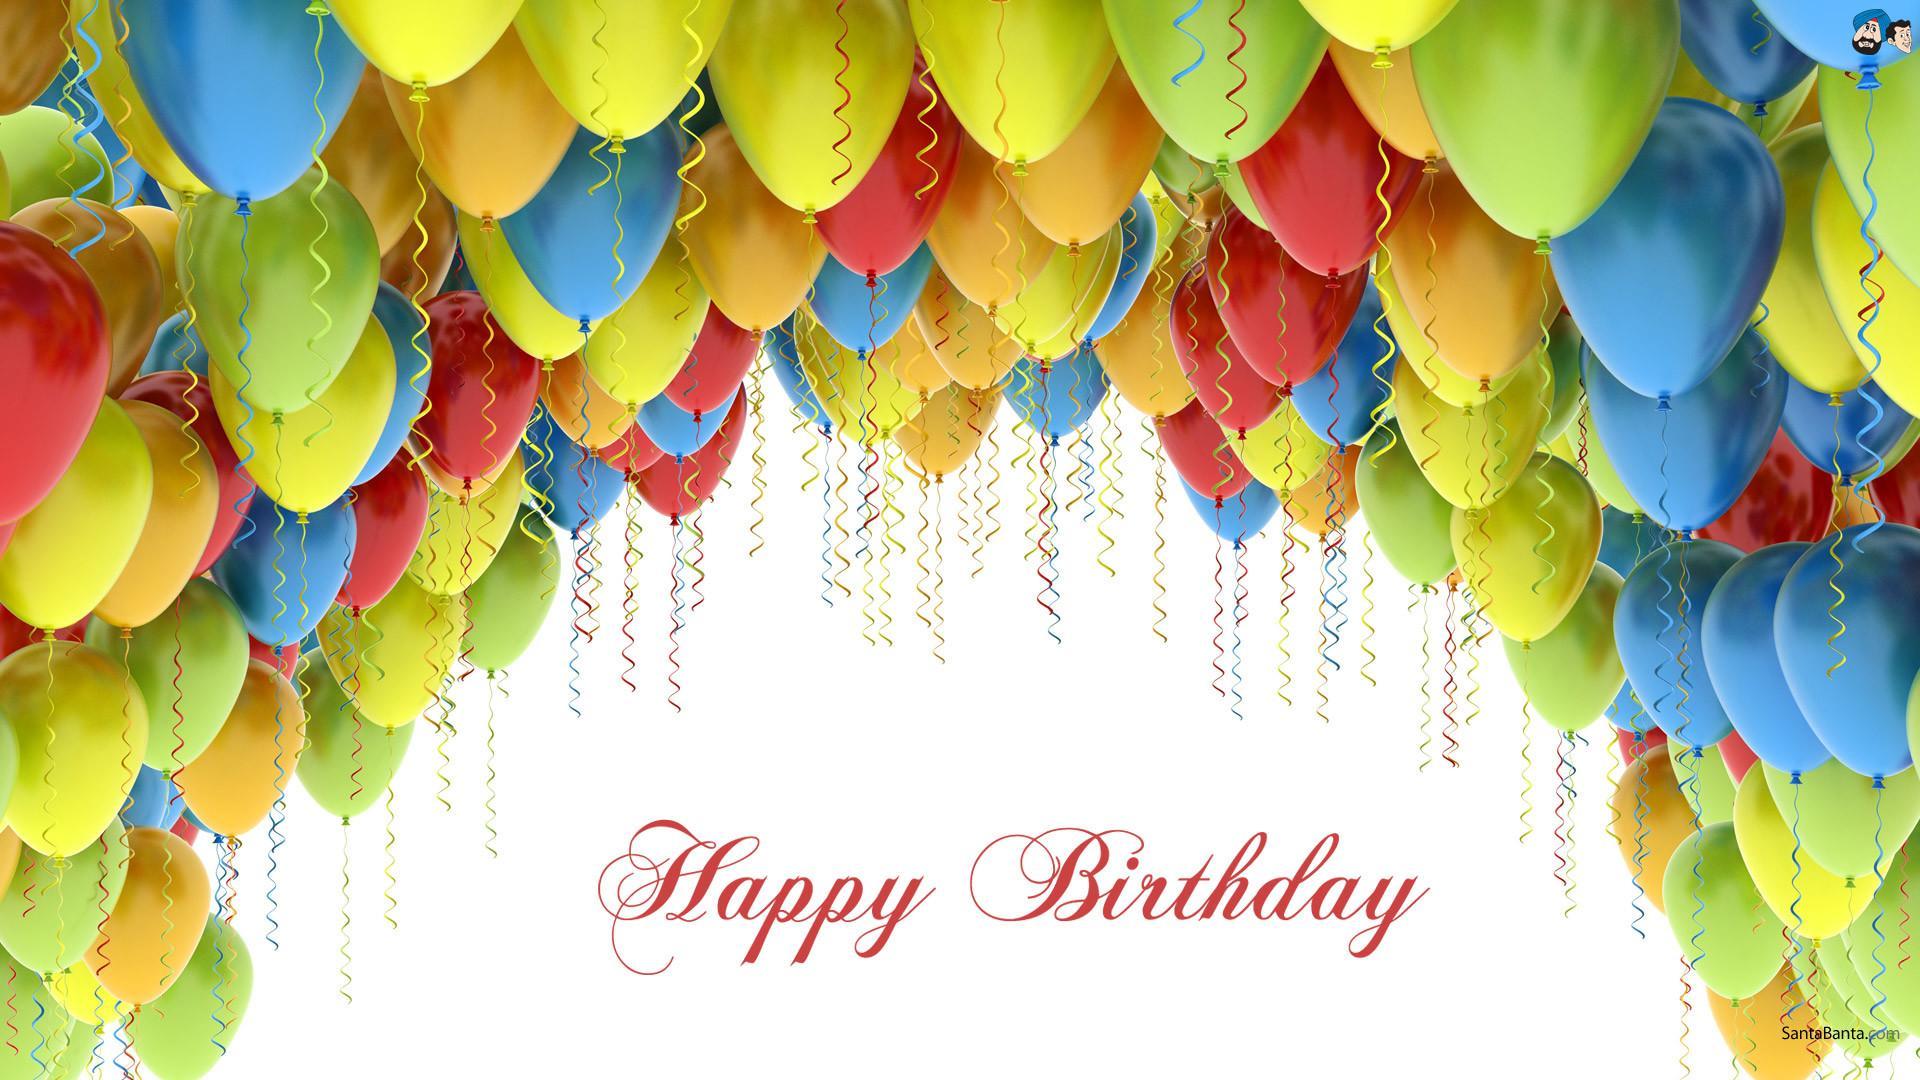 Happy Birthday Balloon Image HD Wallpaper. bellona koltuk takımları